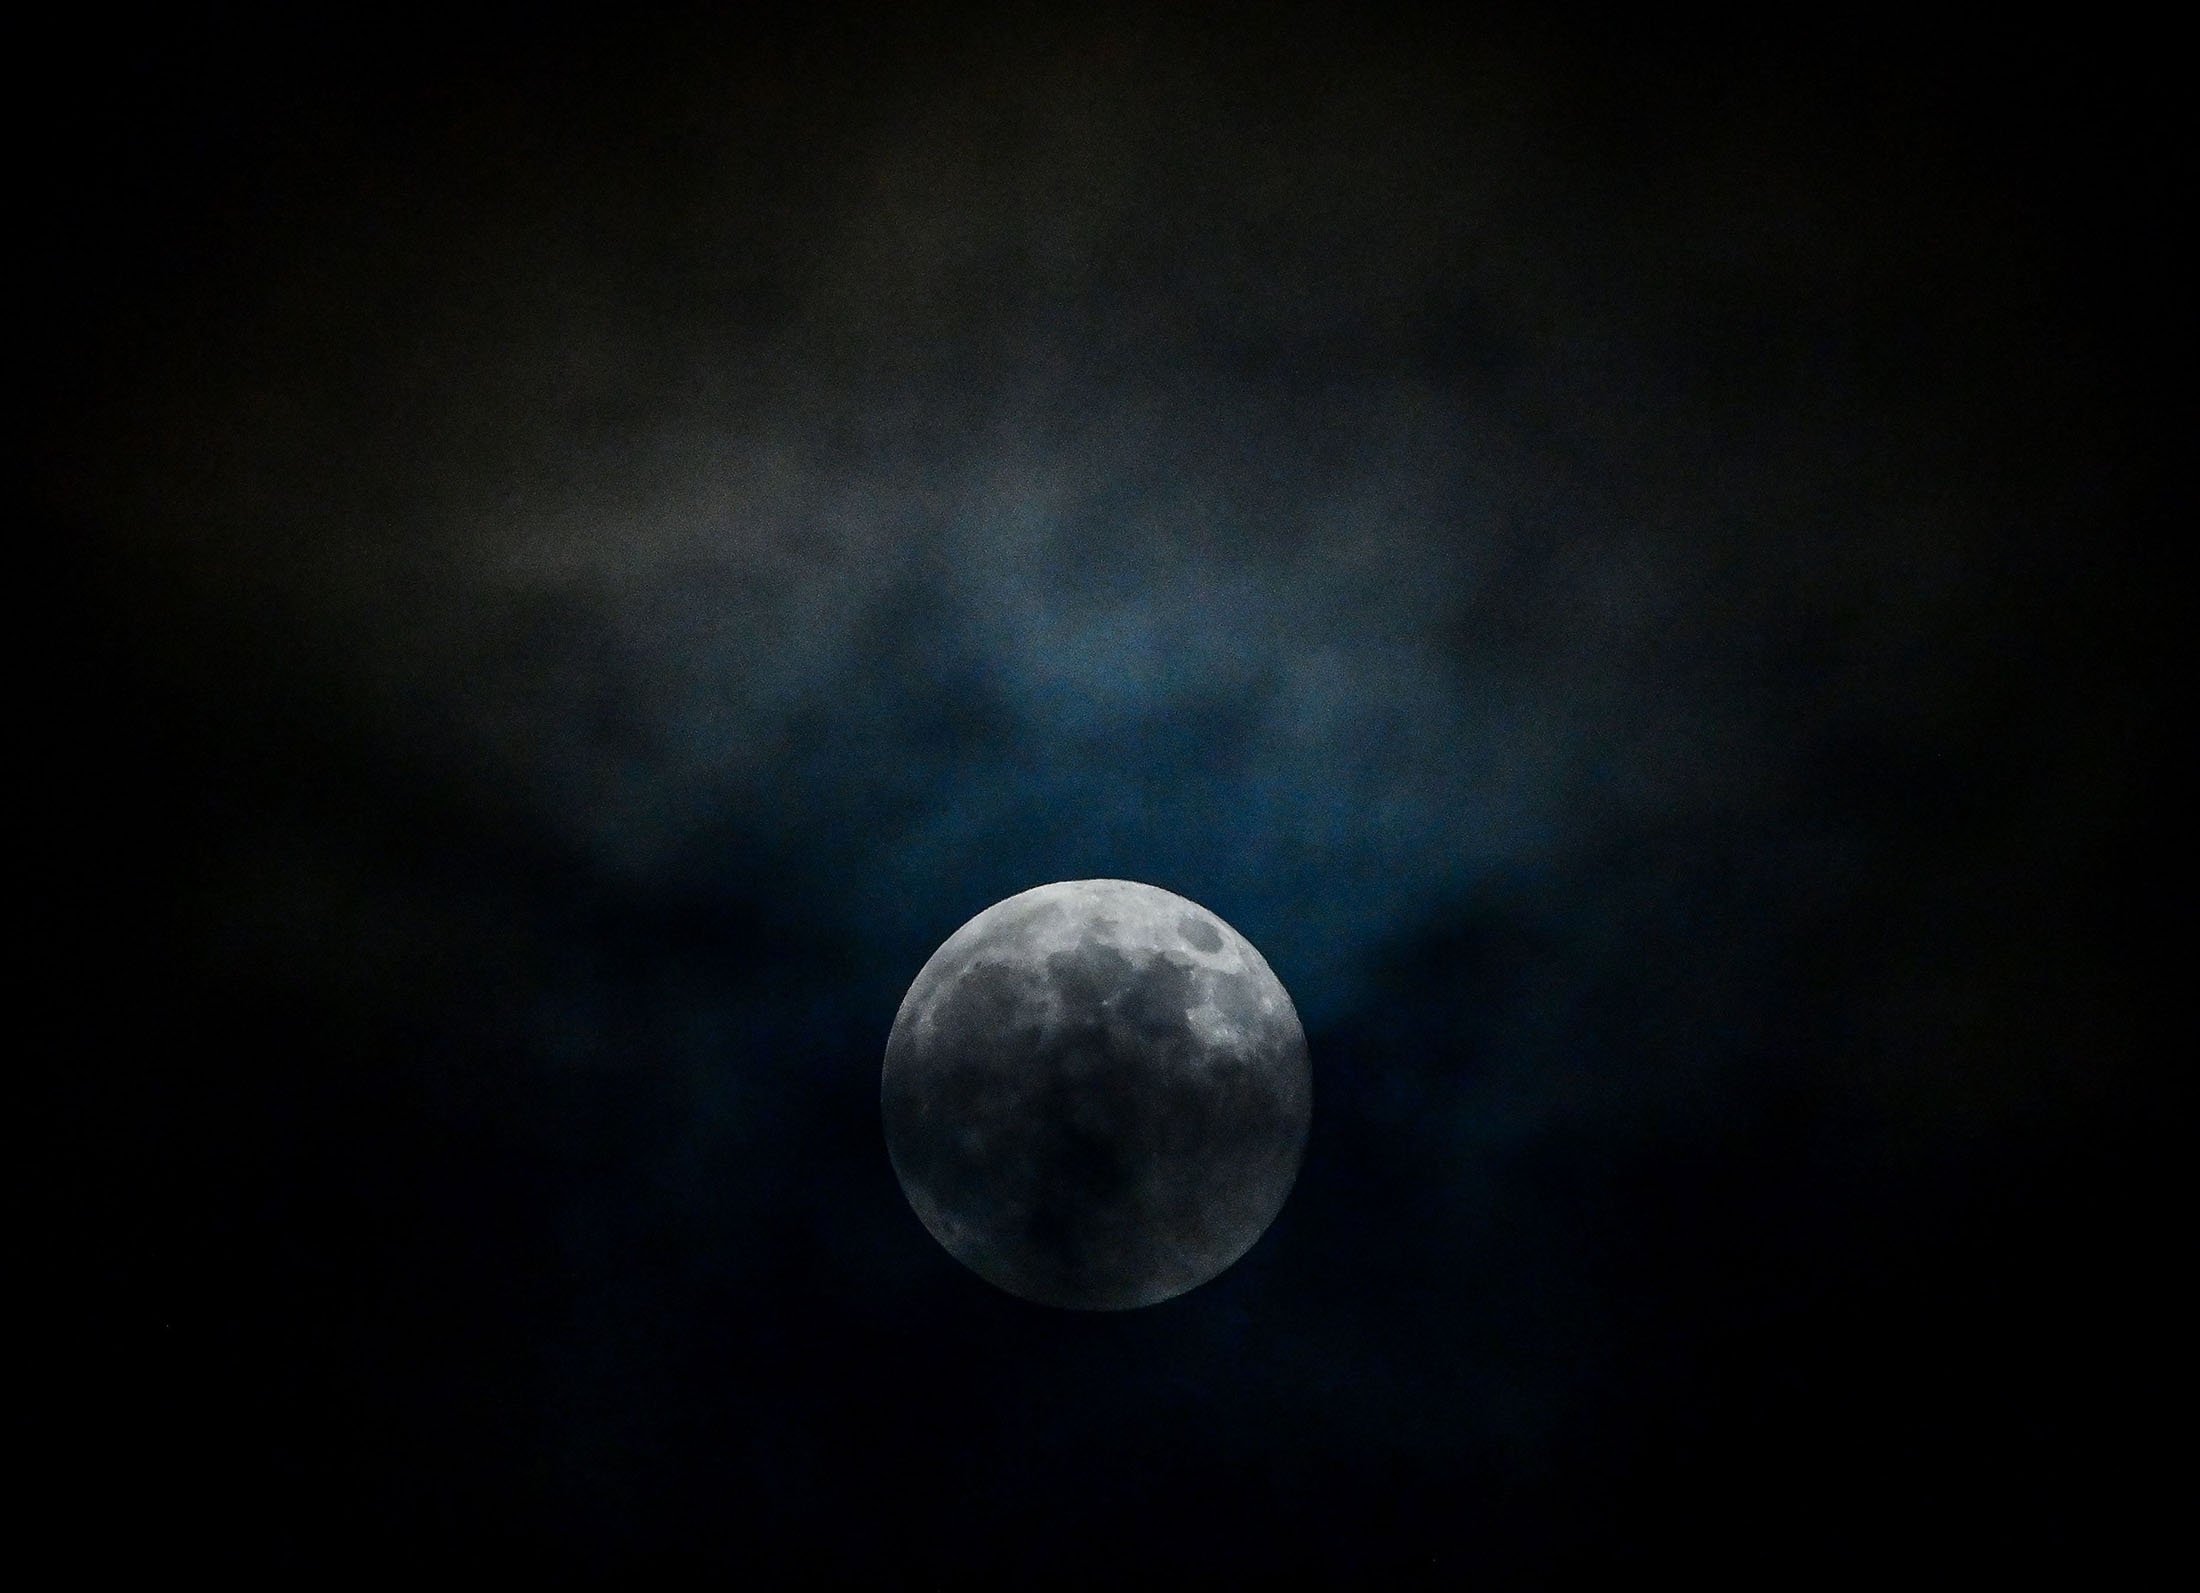 Cold moon illuminates night sky as 2021 nears its end | Daily Sabah